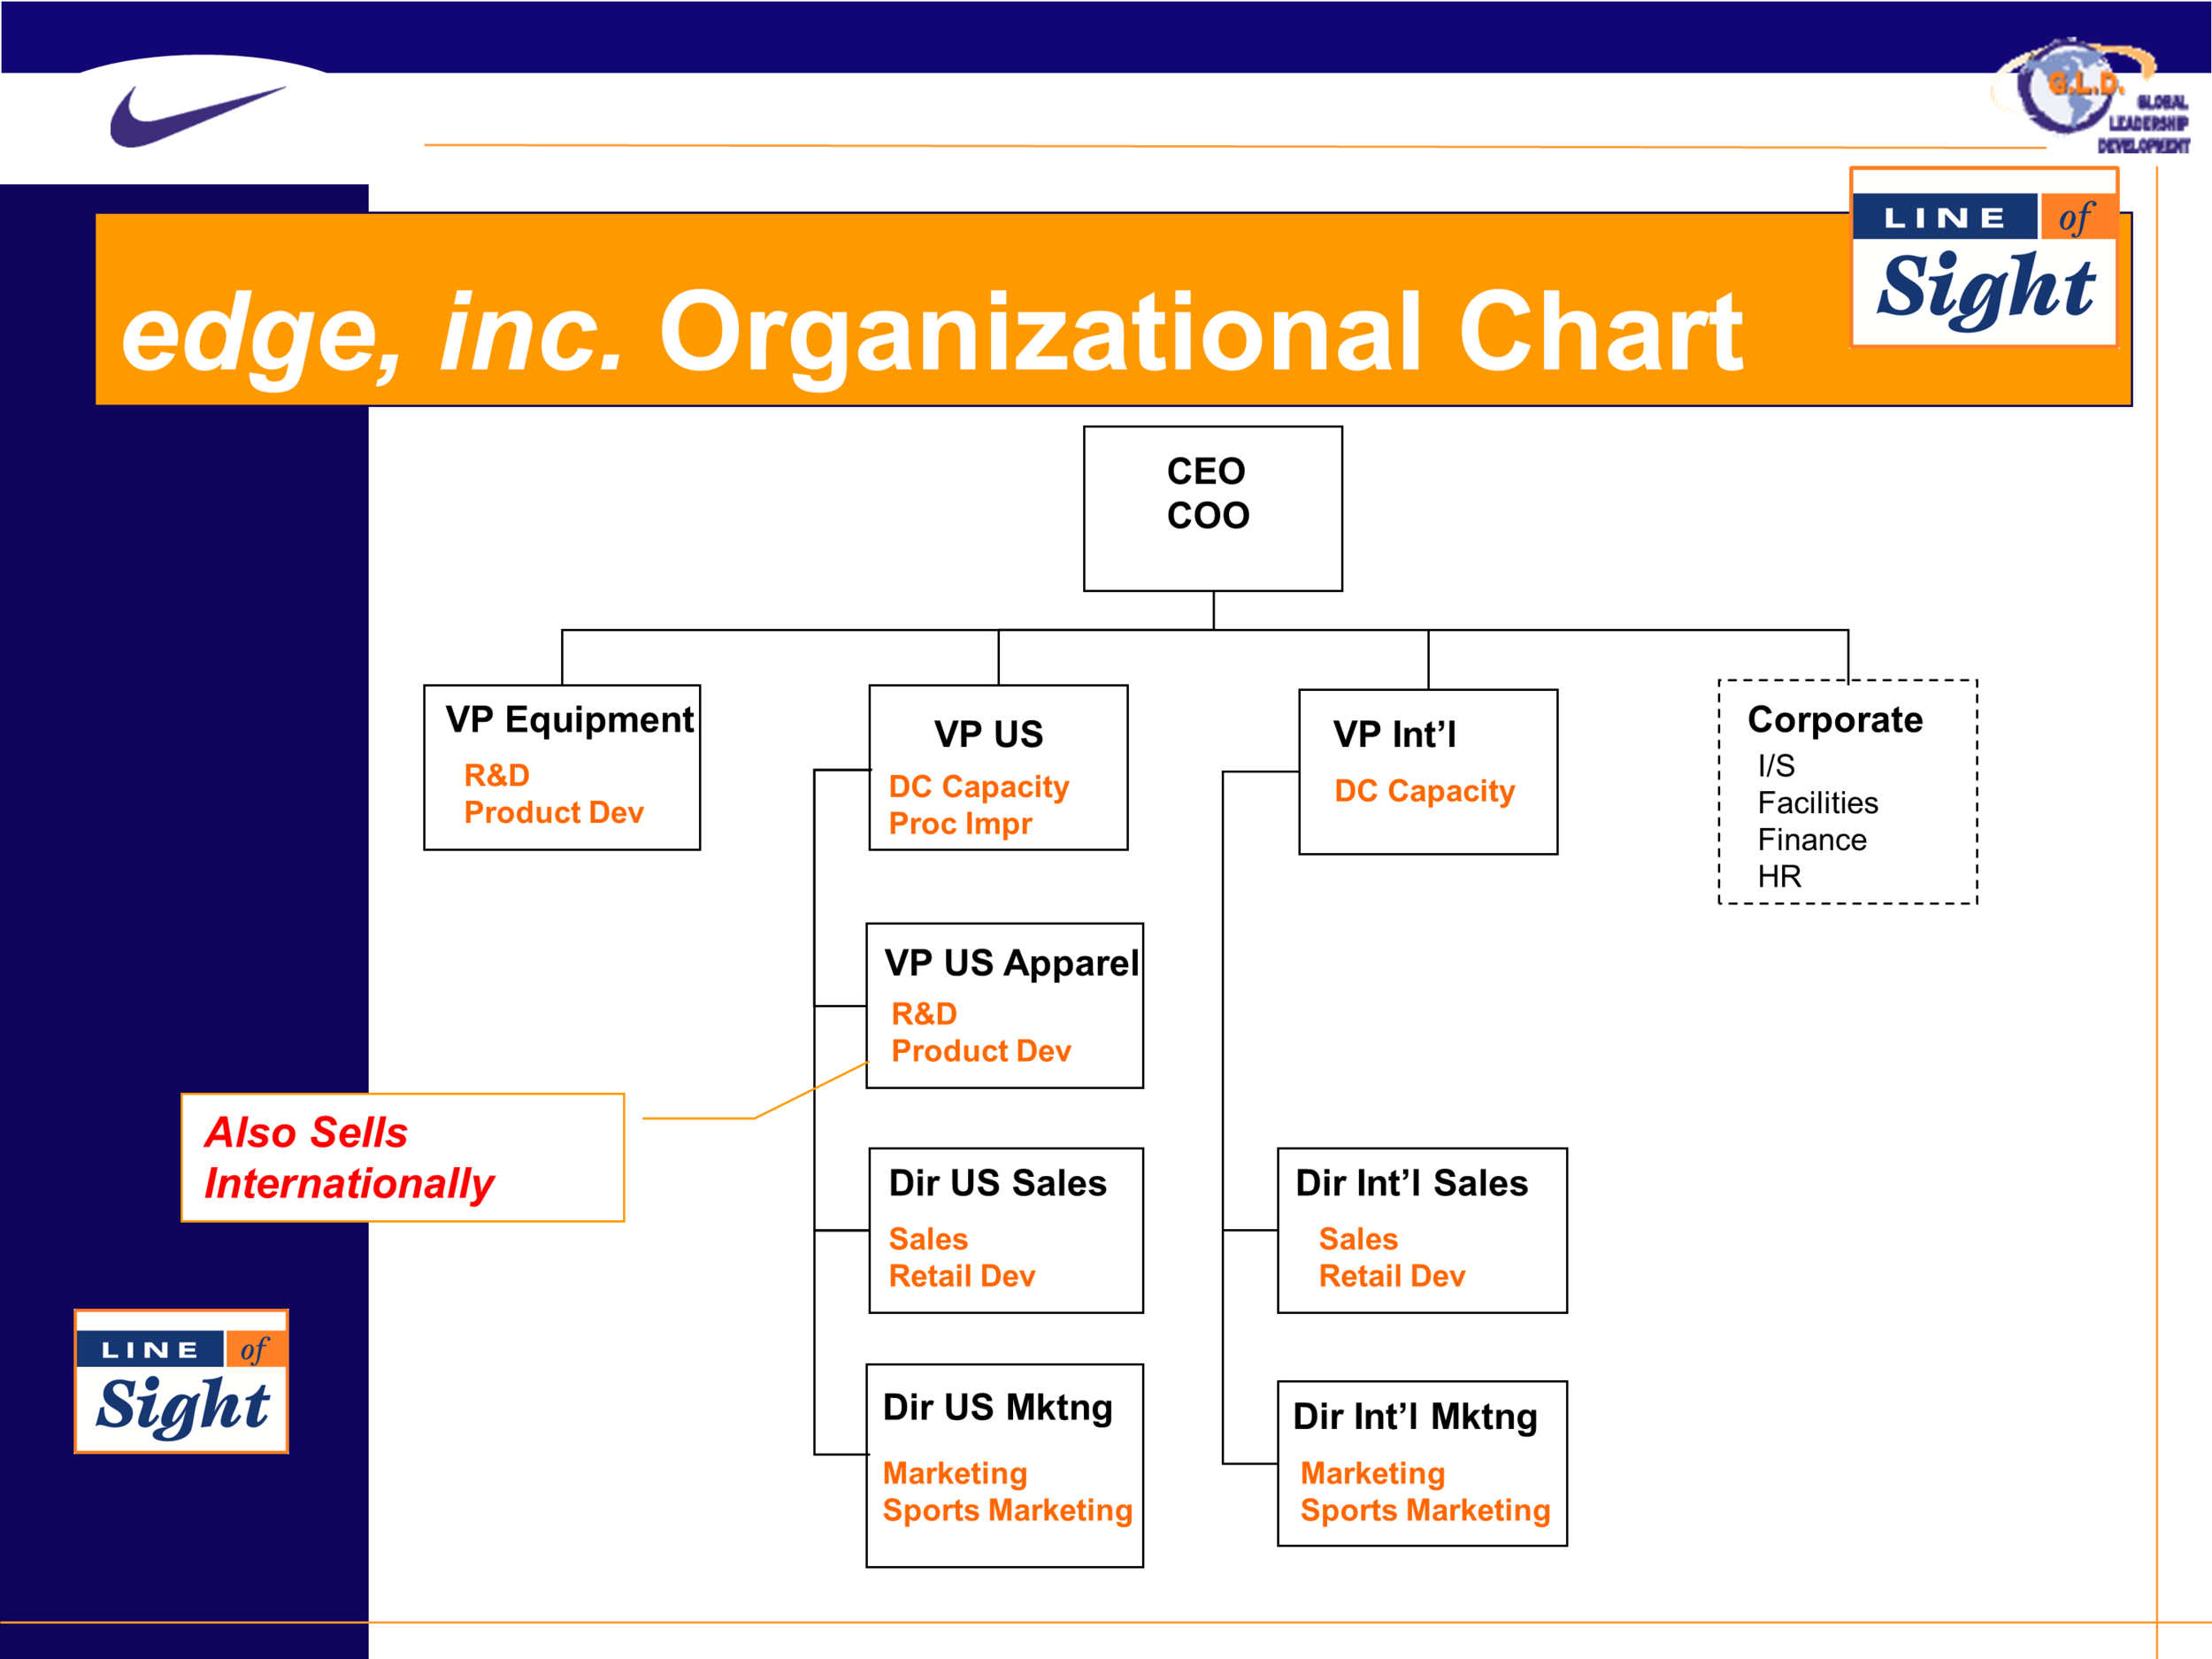 nike flat organizational structure